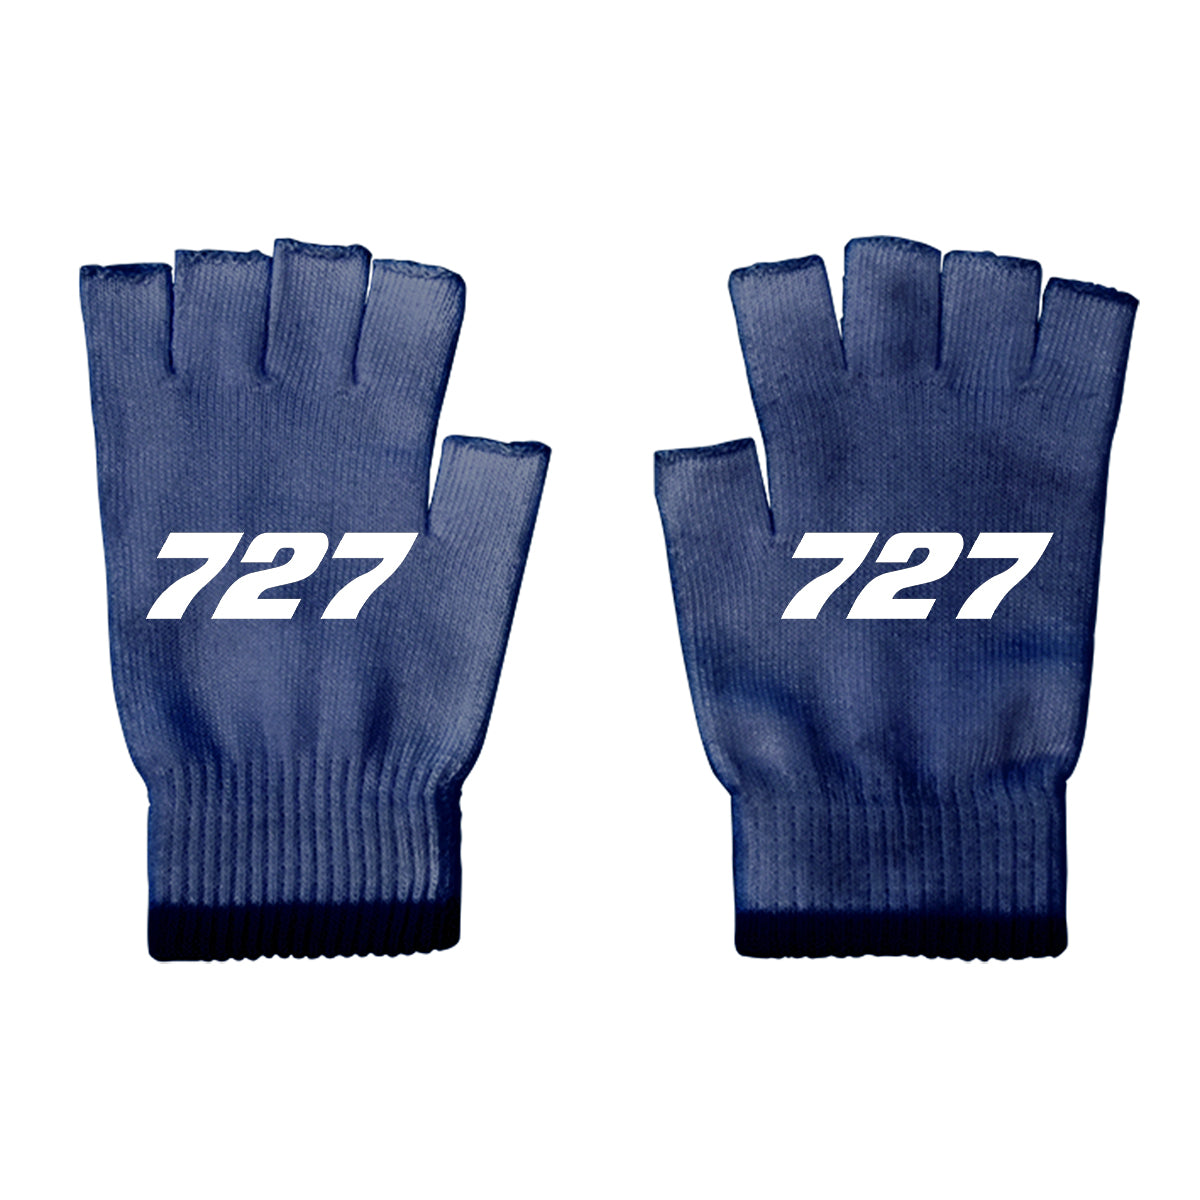 727 Flat Text Designed Cut Gloves